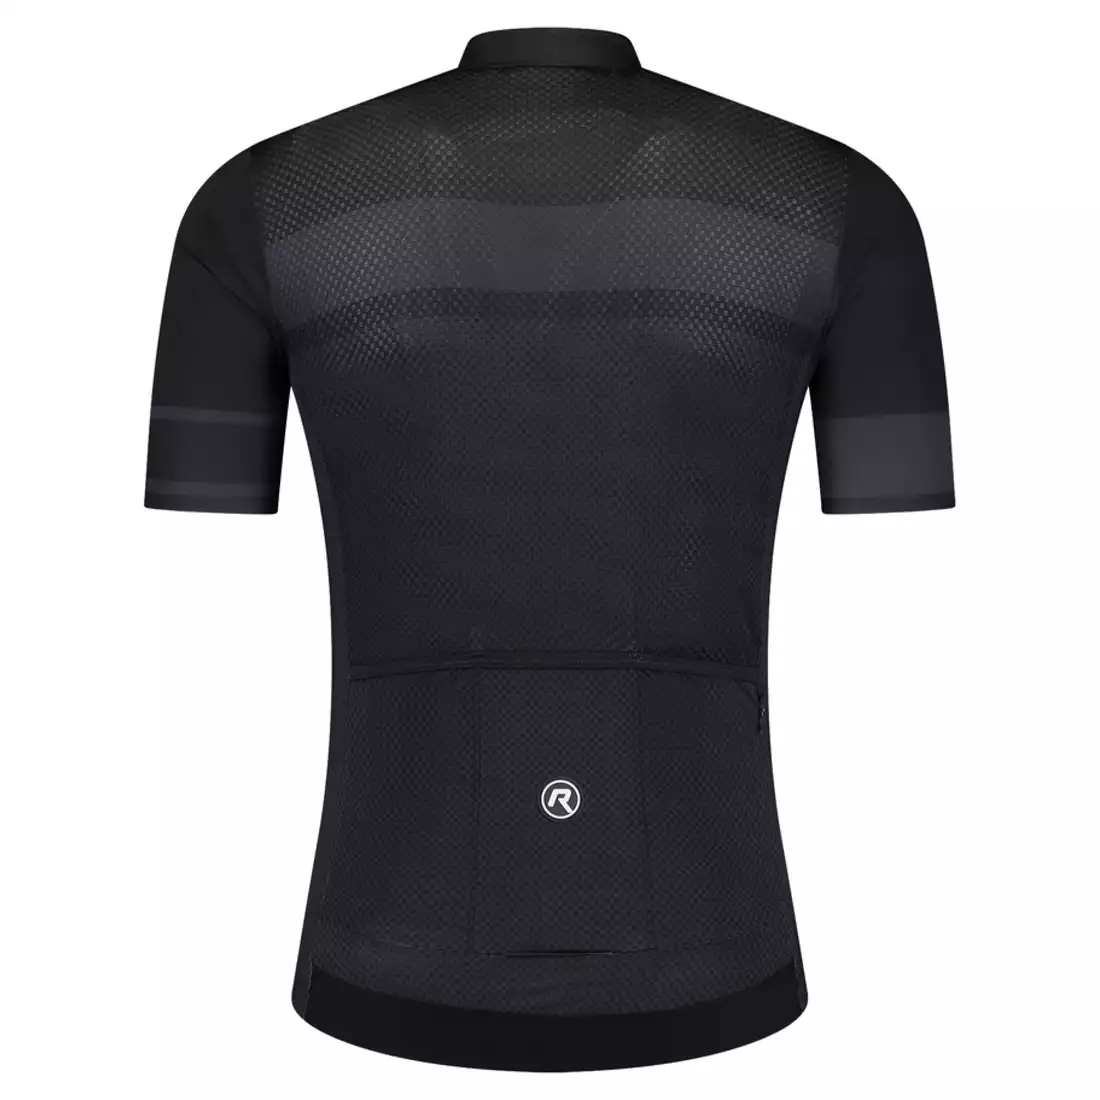 Rogelli BLOCK pánsky cyklistický dres, čierna